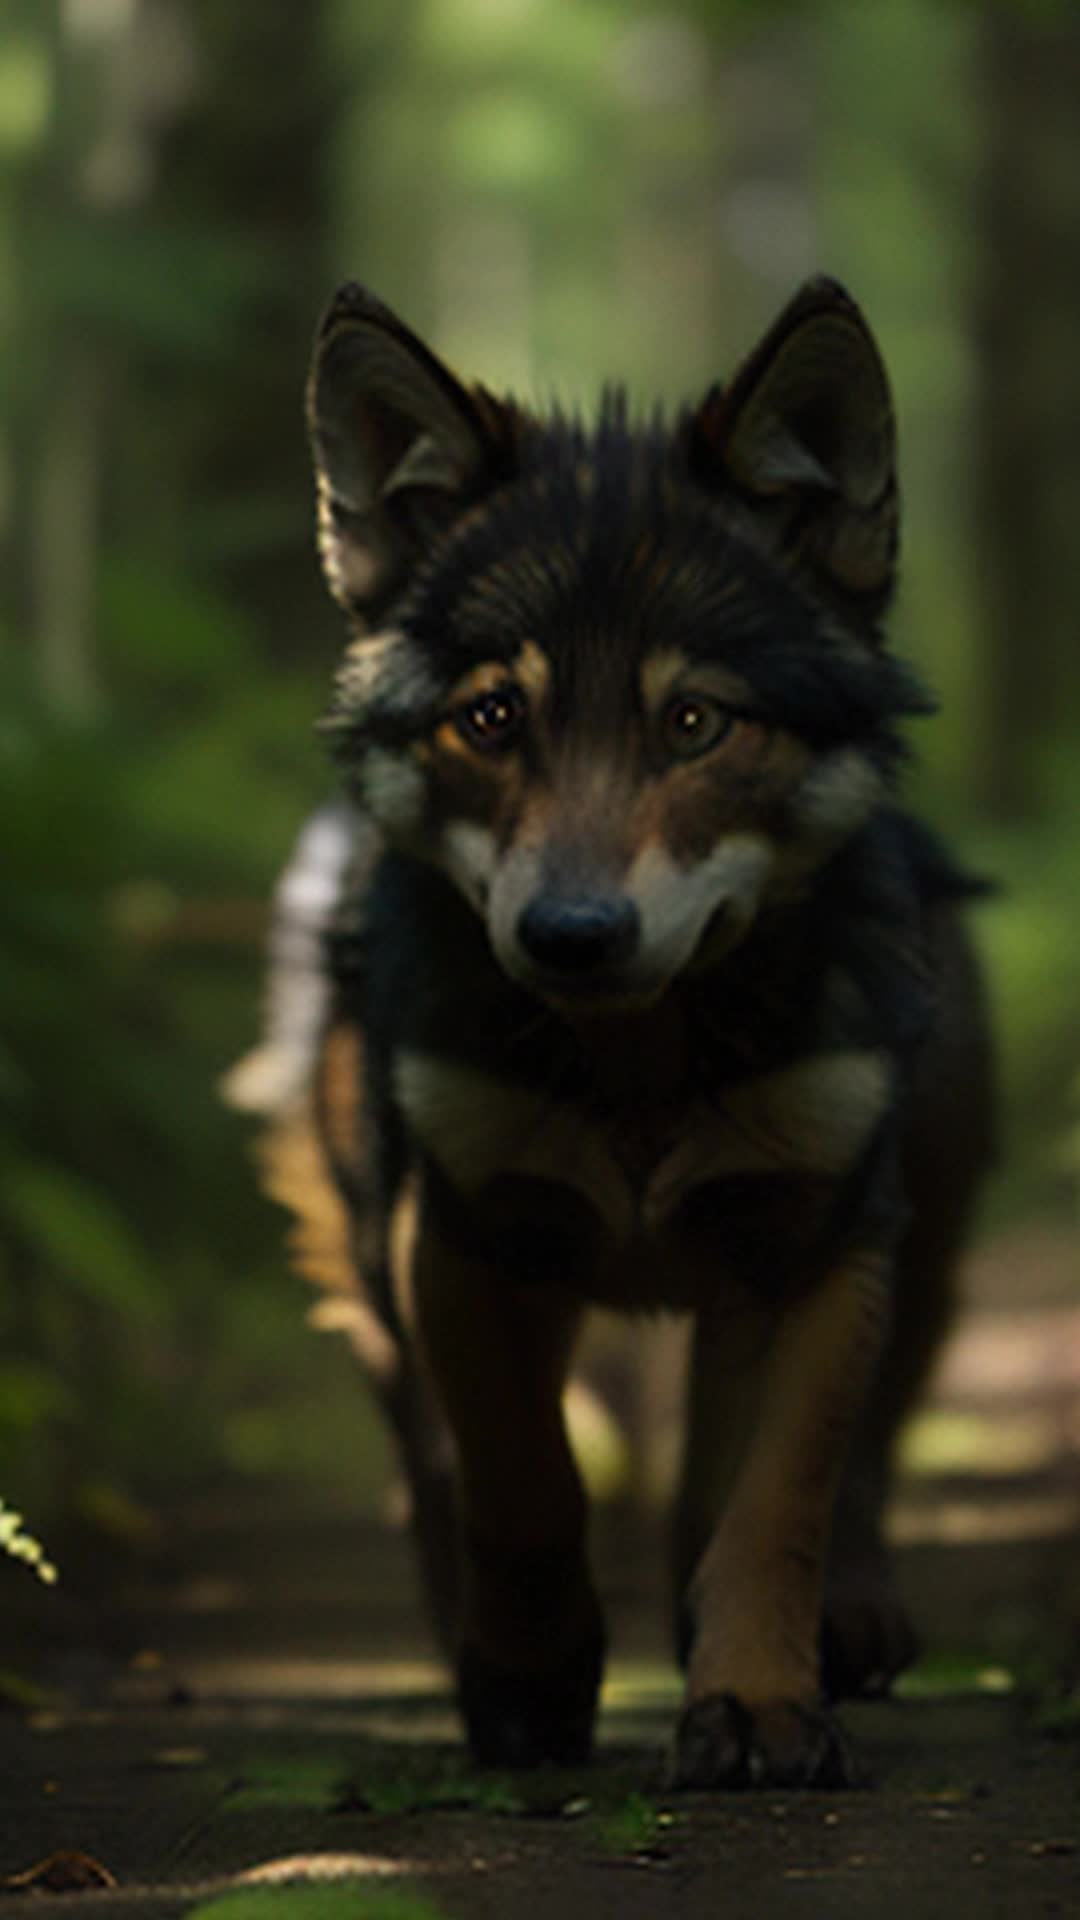 Baby wolf darting, dodging dense ferns, sharp instincts, narrow escape, soft shadows, dynamic movement